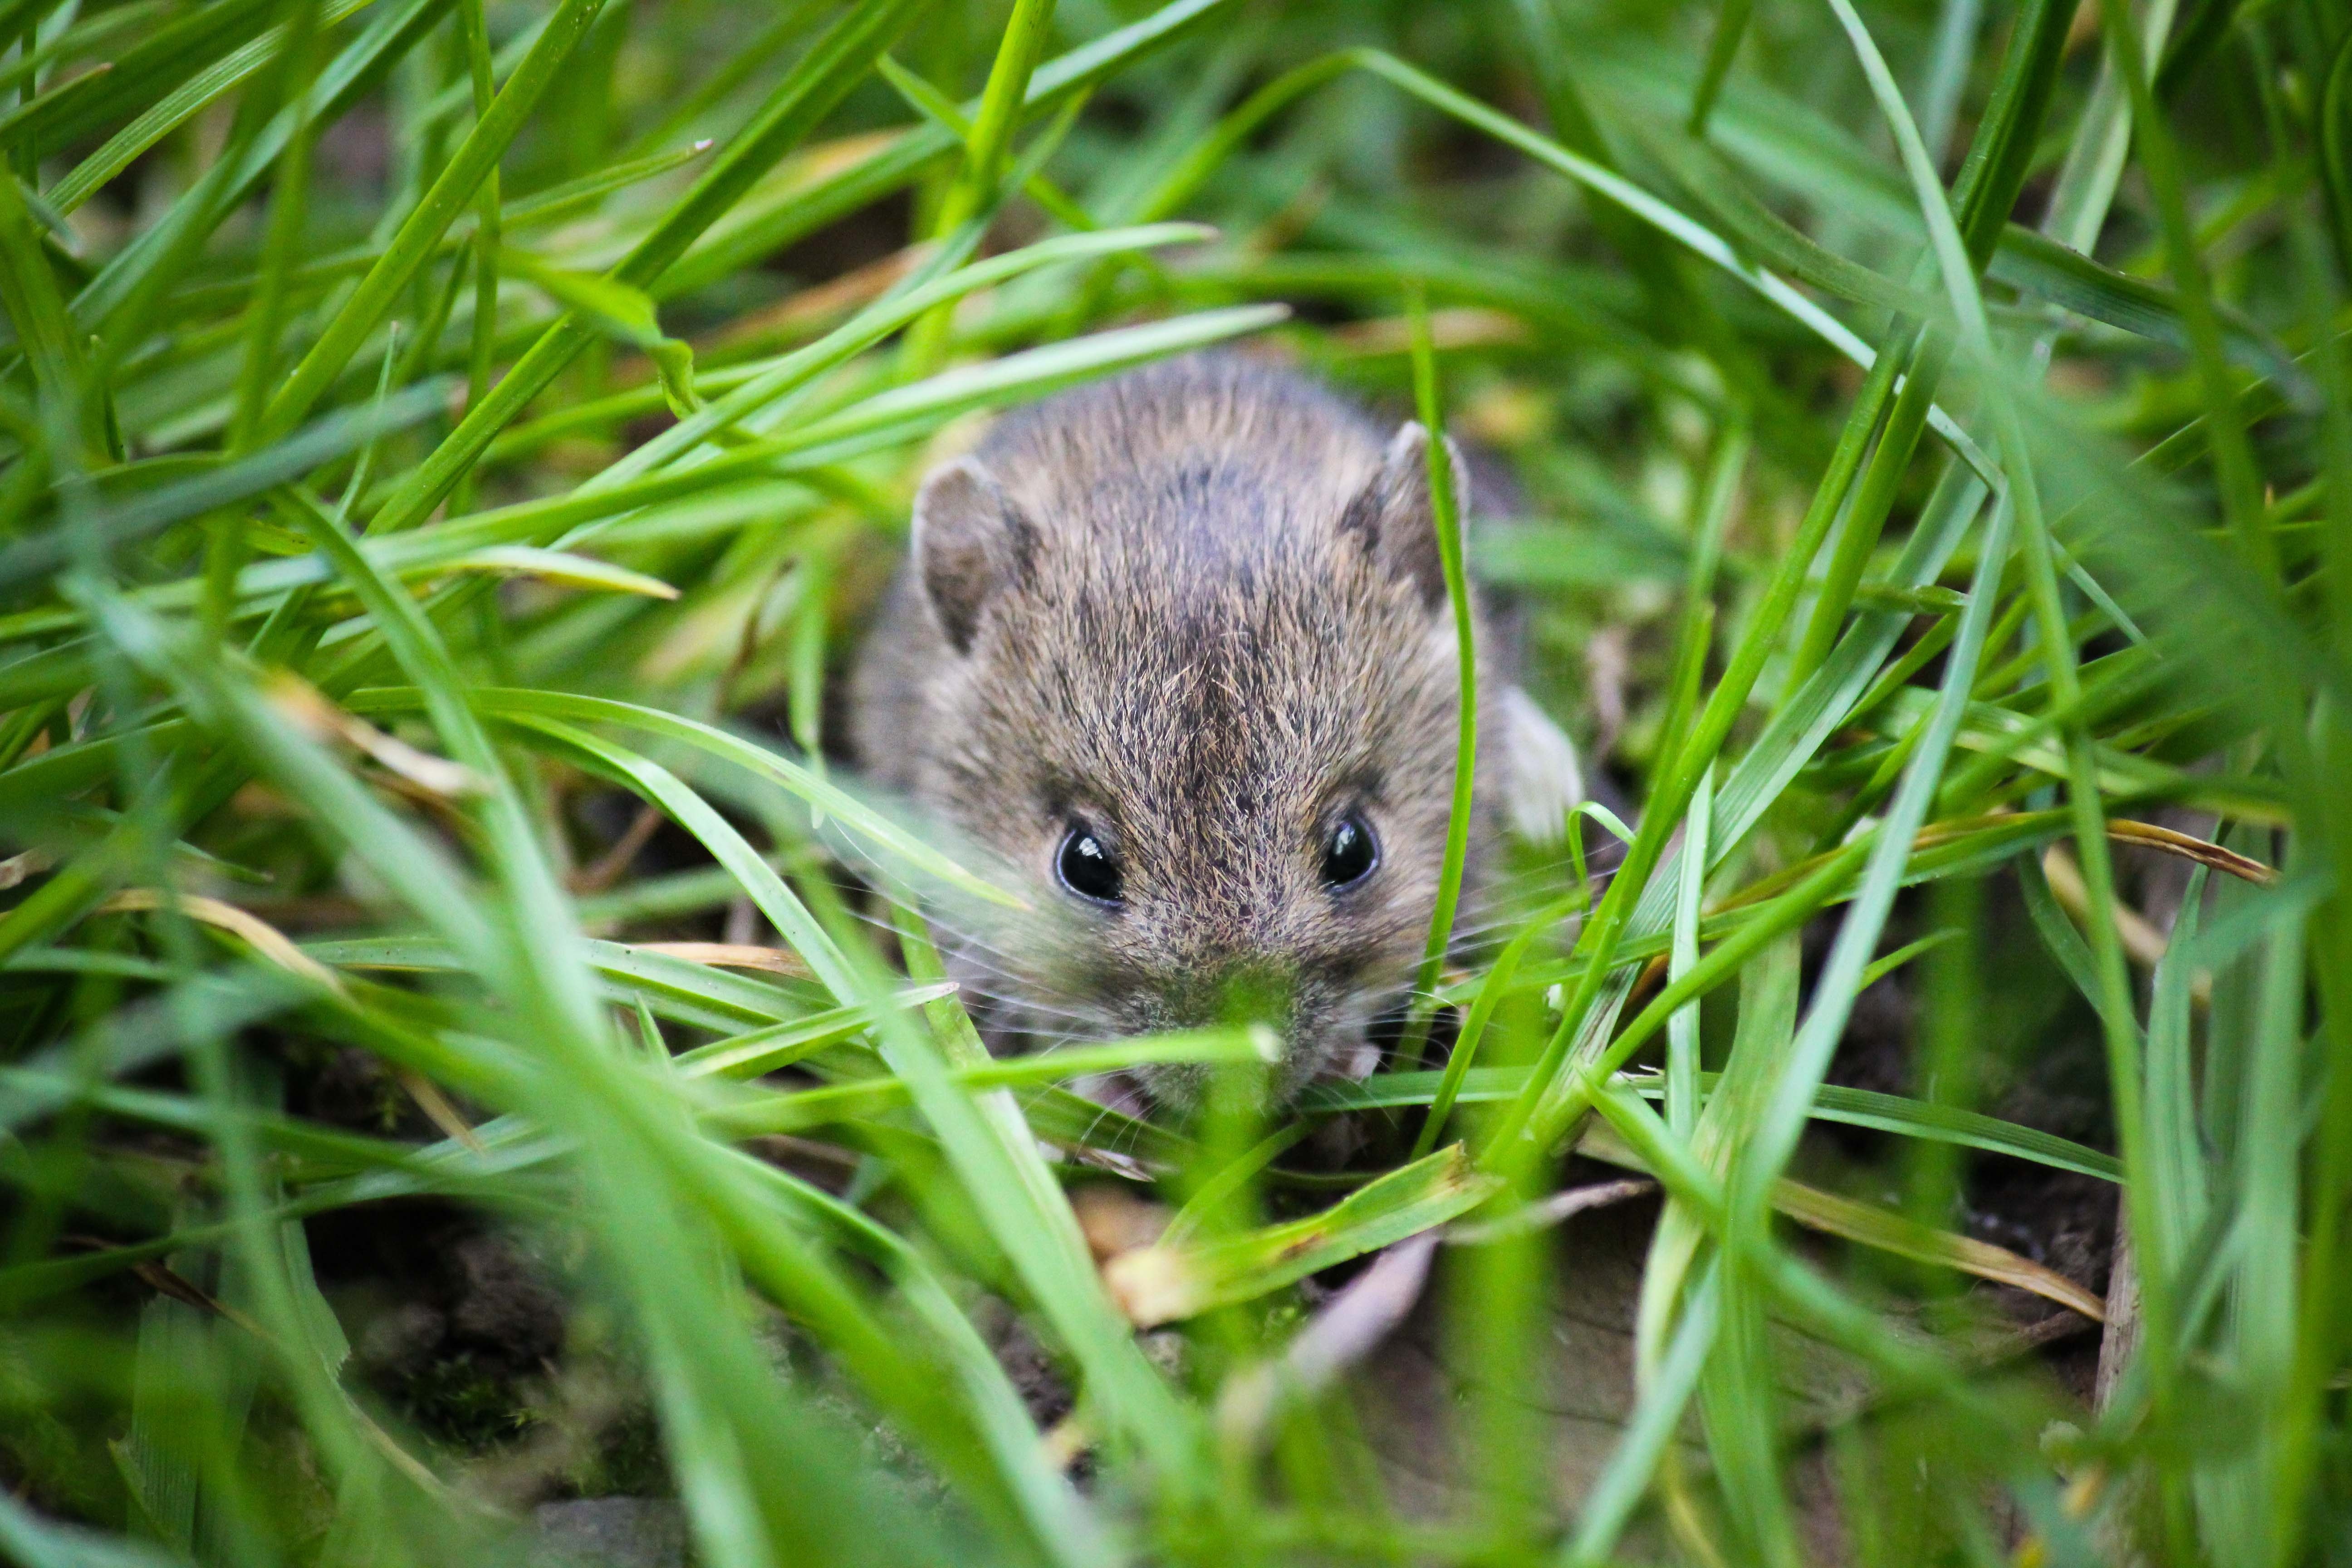 Small Animal, Small, Garden, Mouse, one animal, grass